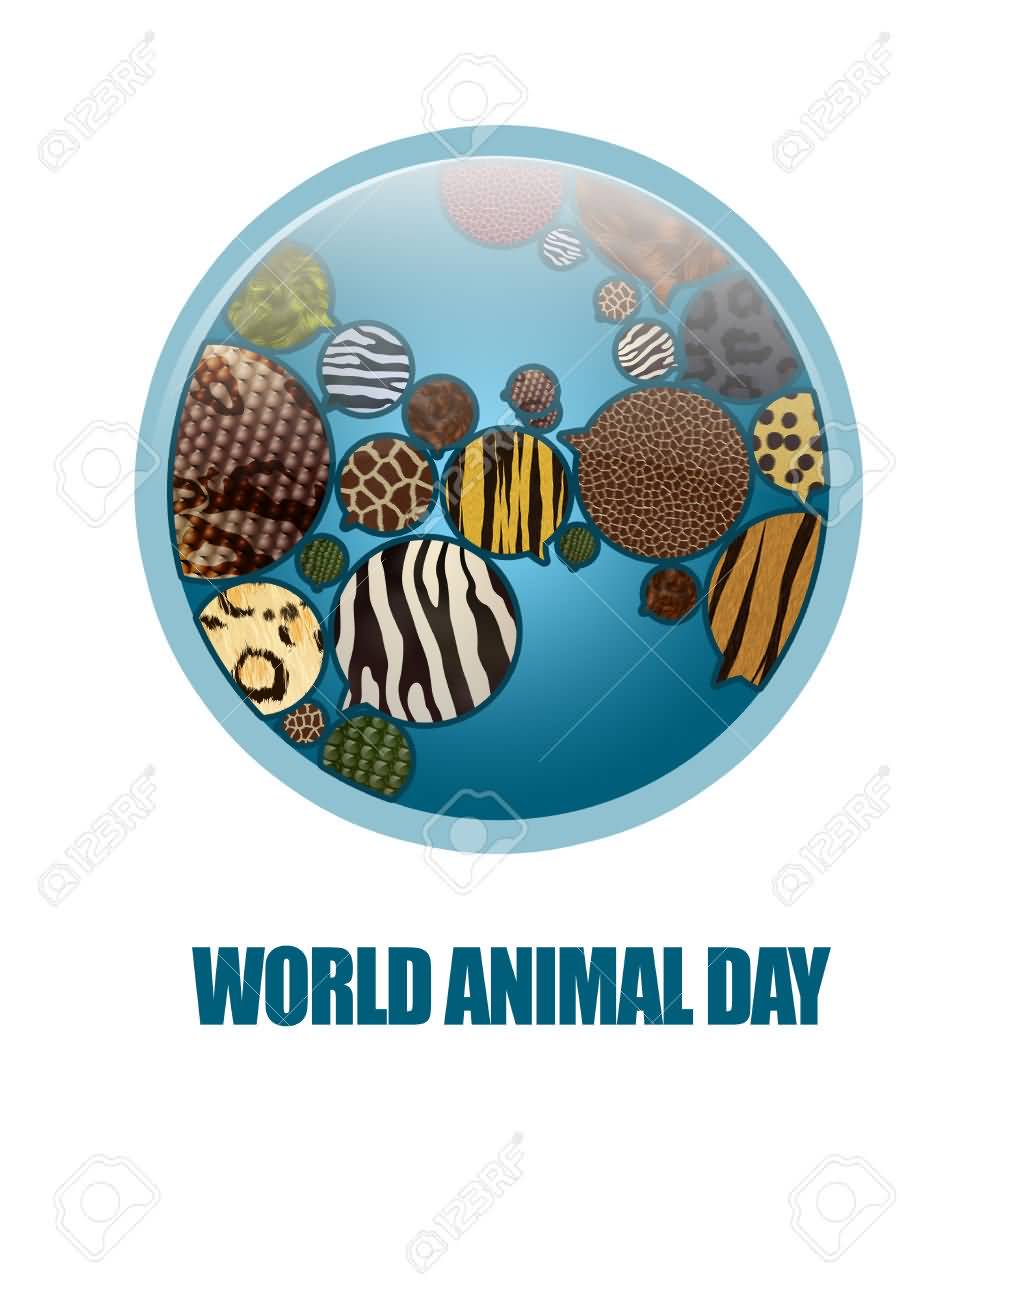 World Animal Day 2016 Wishes